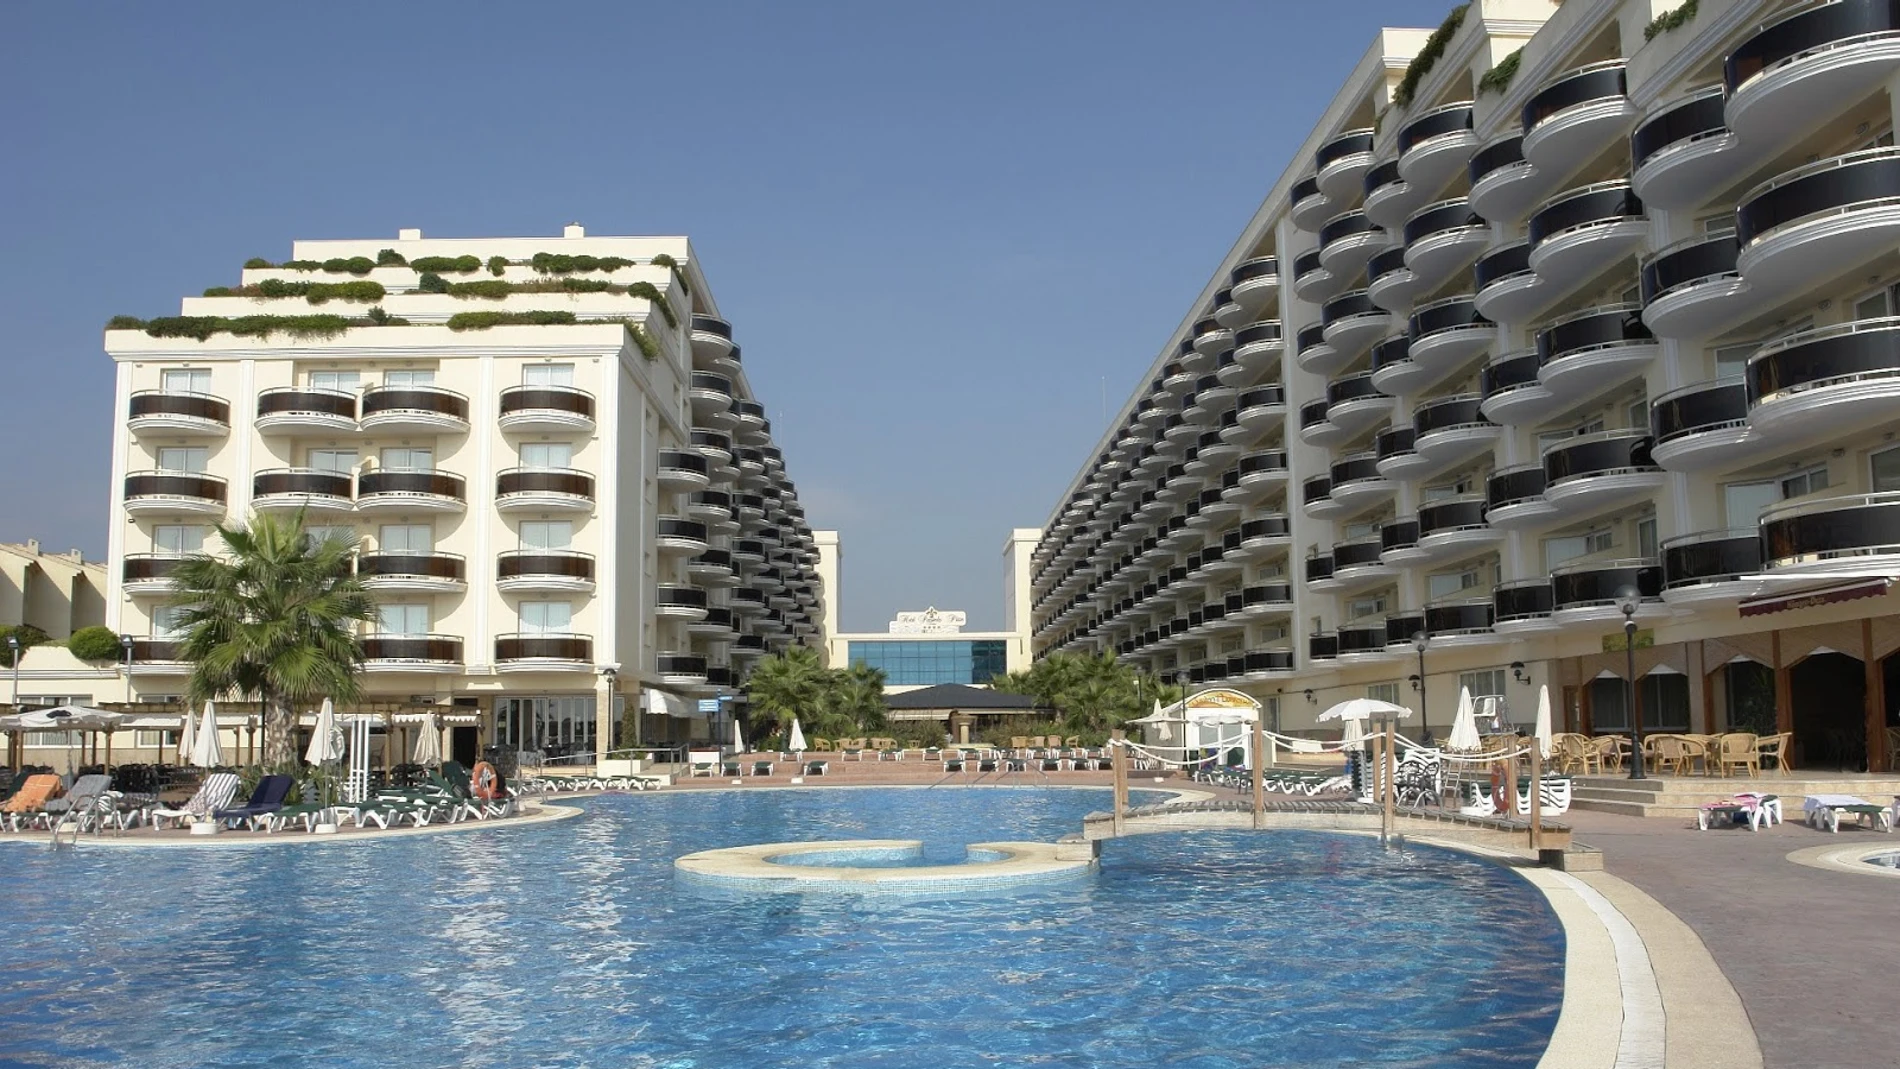 Hotel Cabo de Gata Plaza Suites